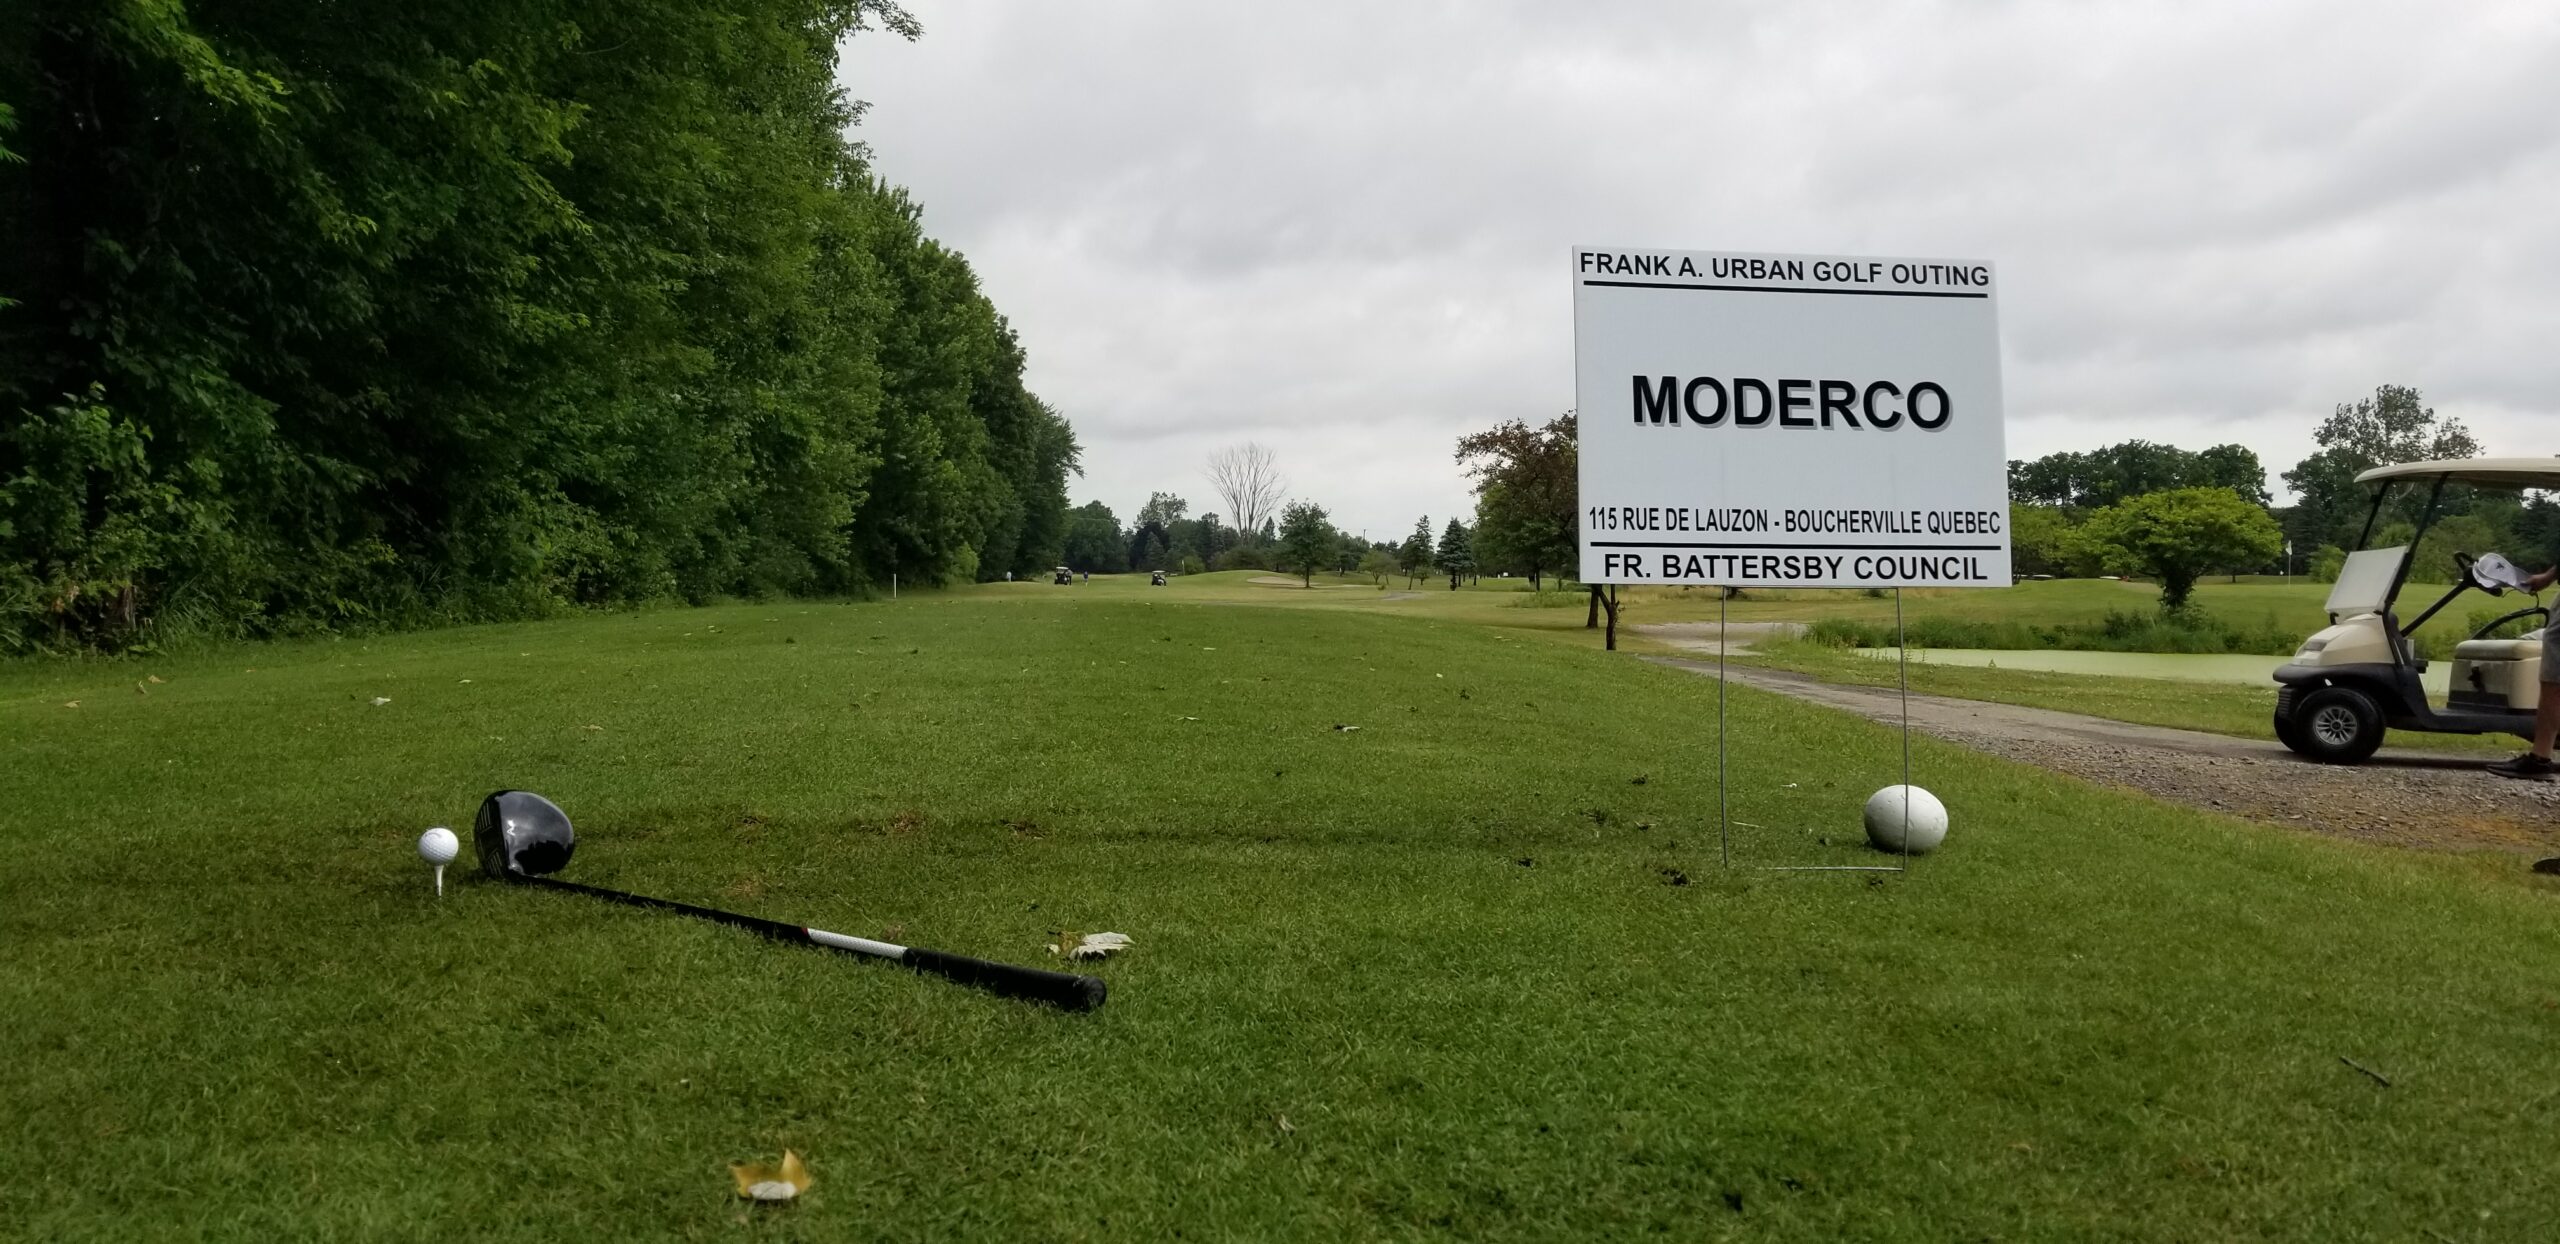 2020 Moderco hole sponsor